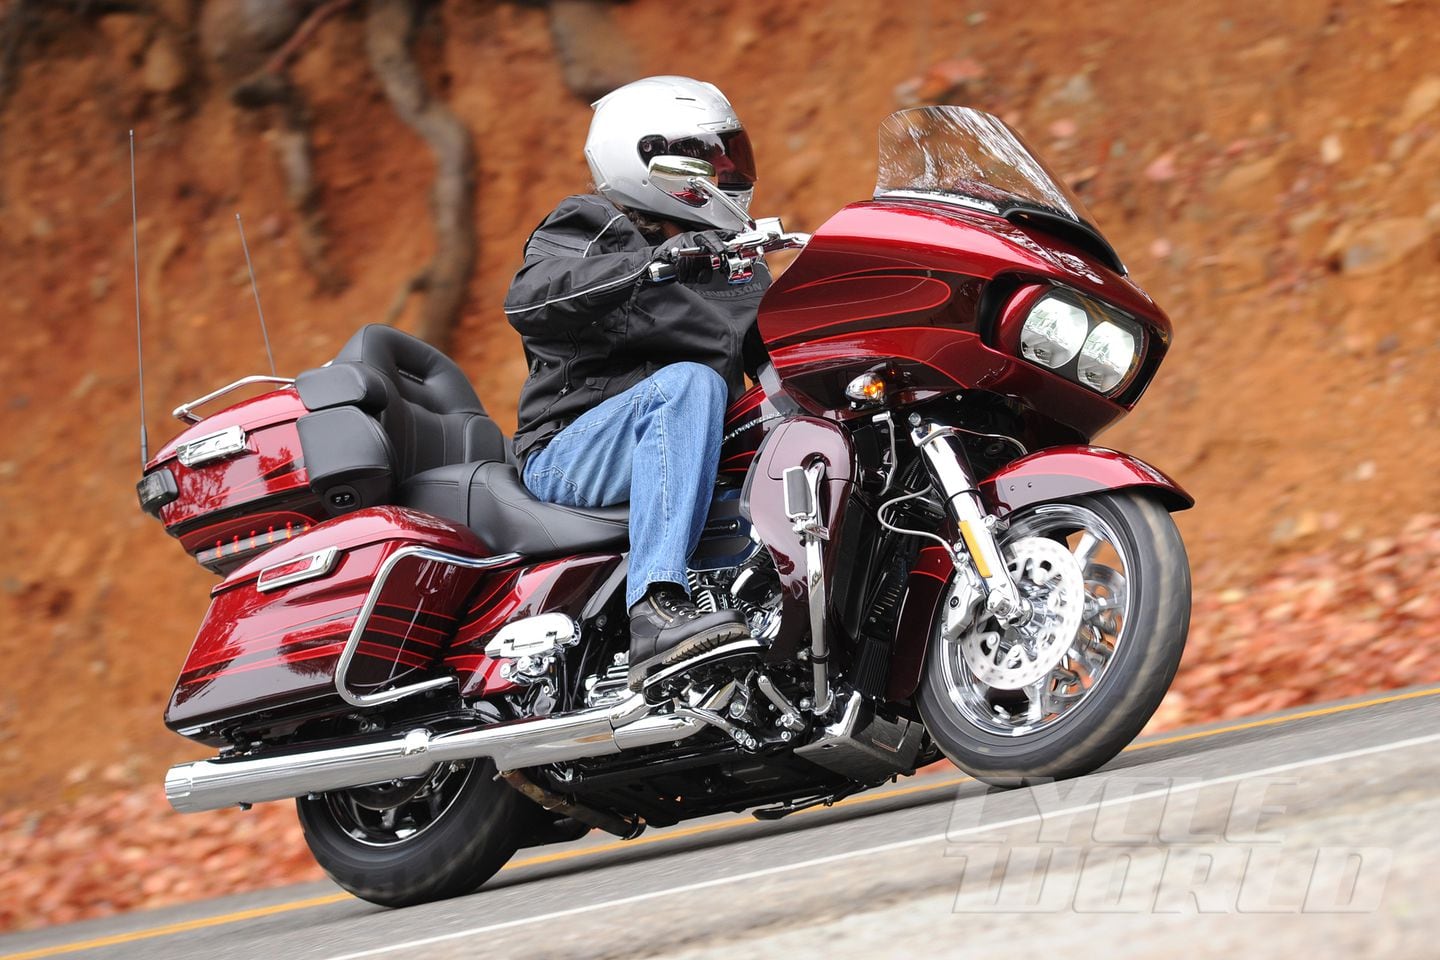 2015 Harley Davidson Cvo Road Glide Ultra Touring Motorcycle Review Cycle World